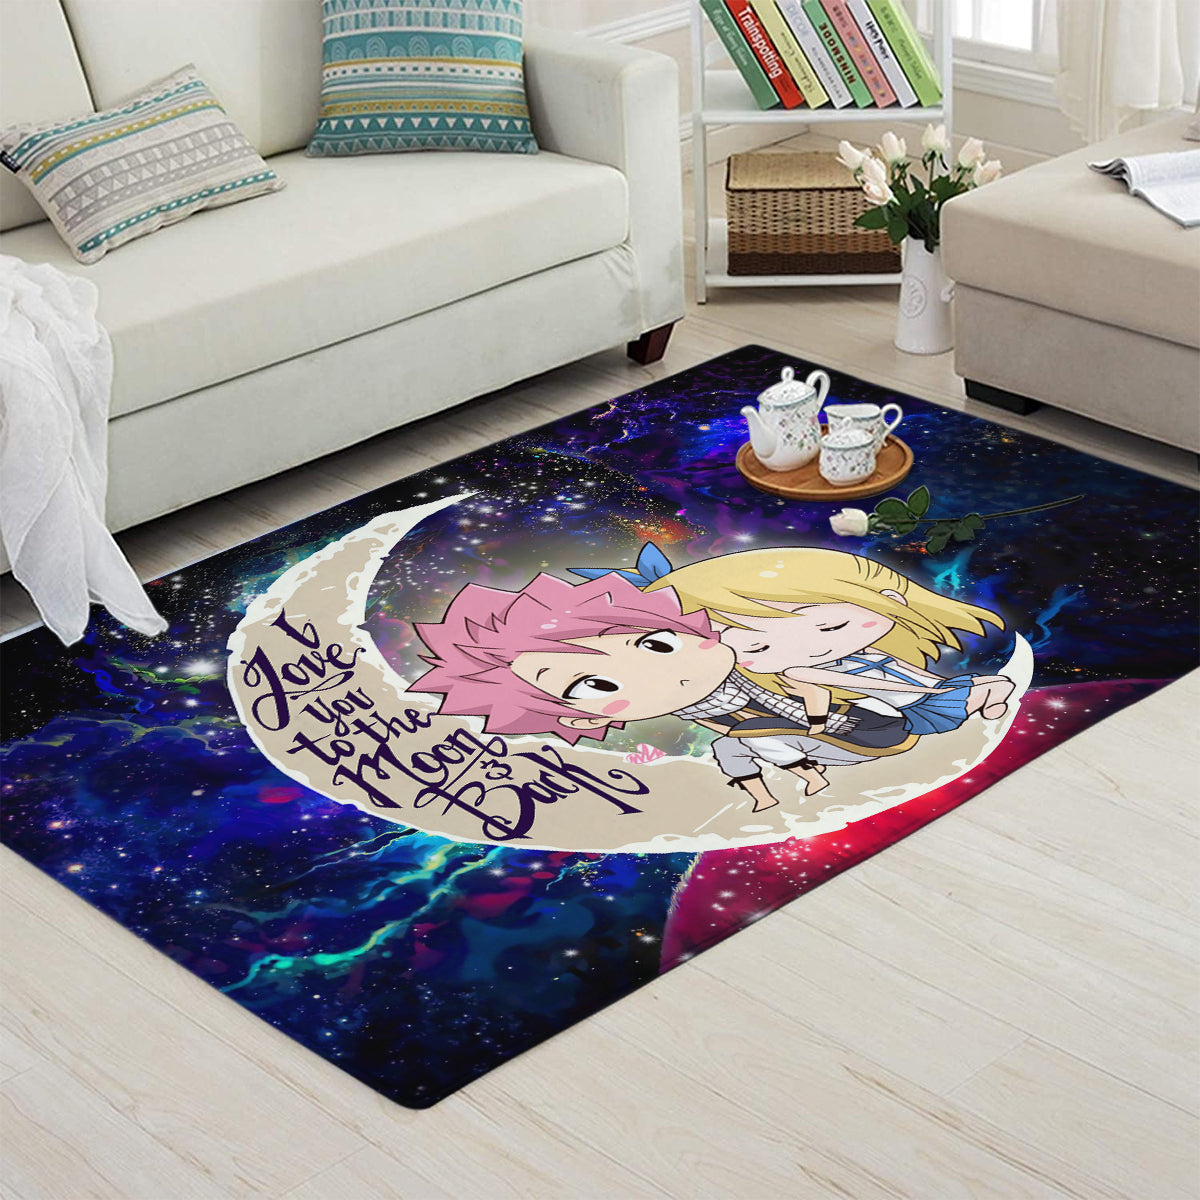 Natsu Fairy Tail Anime Love You To The Moon Galaxy Carpet Rug Home Room Decor